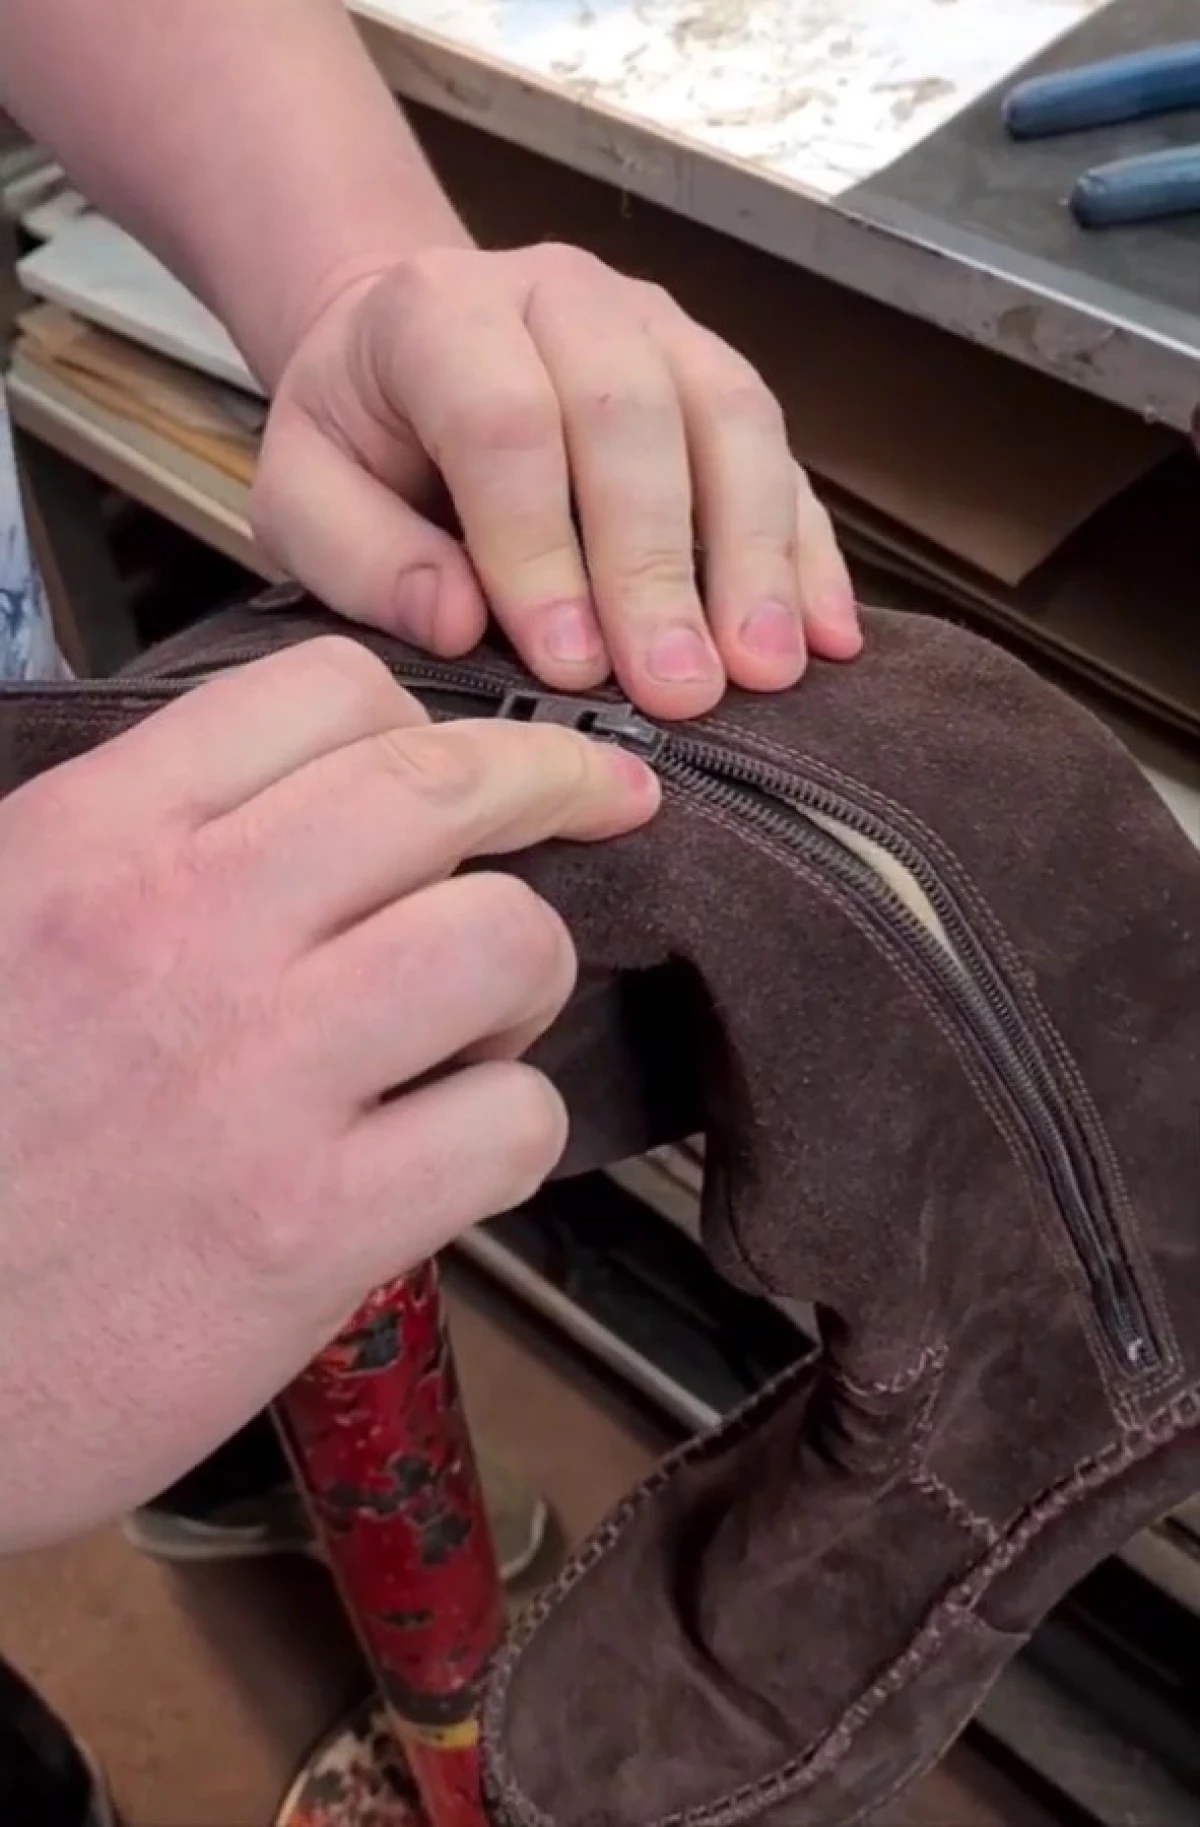 Shoemaker သည်မတူကွဲပြားသော zipper ကိုမည်သို့ဖြေရှင်းရမည်ကိုပြသခဲ့သည်။ ၎င်းသည်ပုံရသည်ထက်ပိုမိုလွယ်ကူသည် 545_3